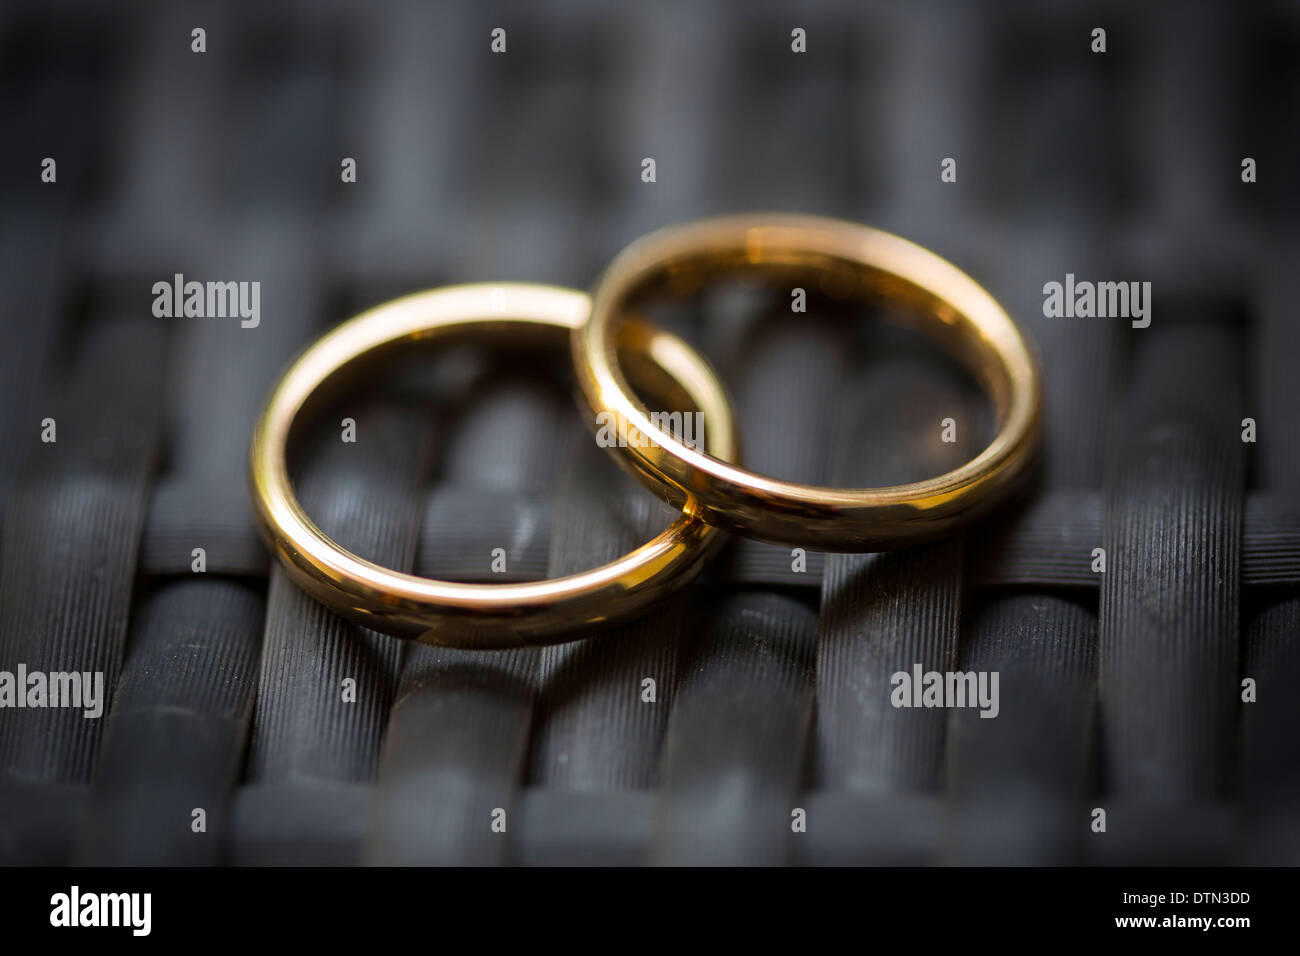 Wedding ring, close-up Stock Photo